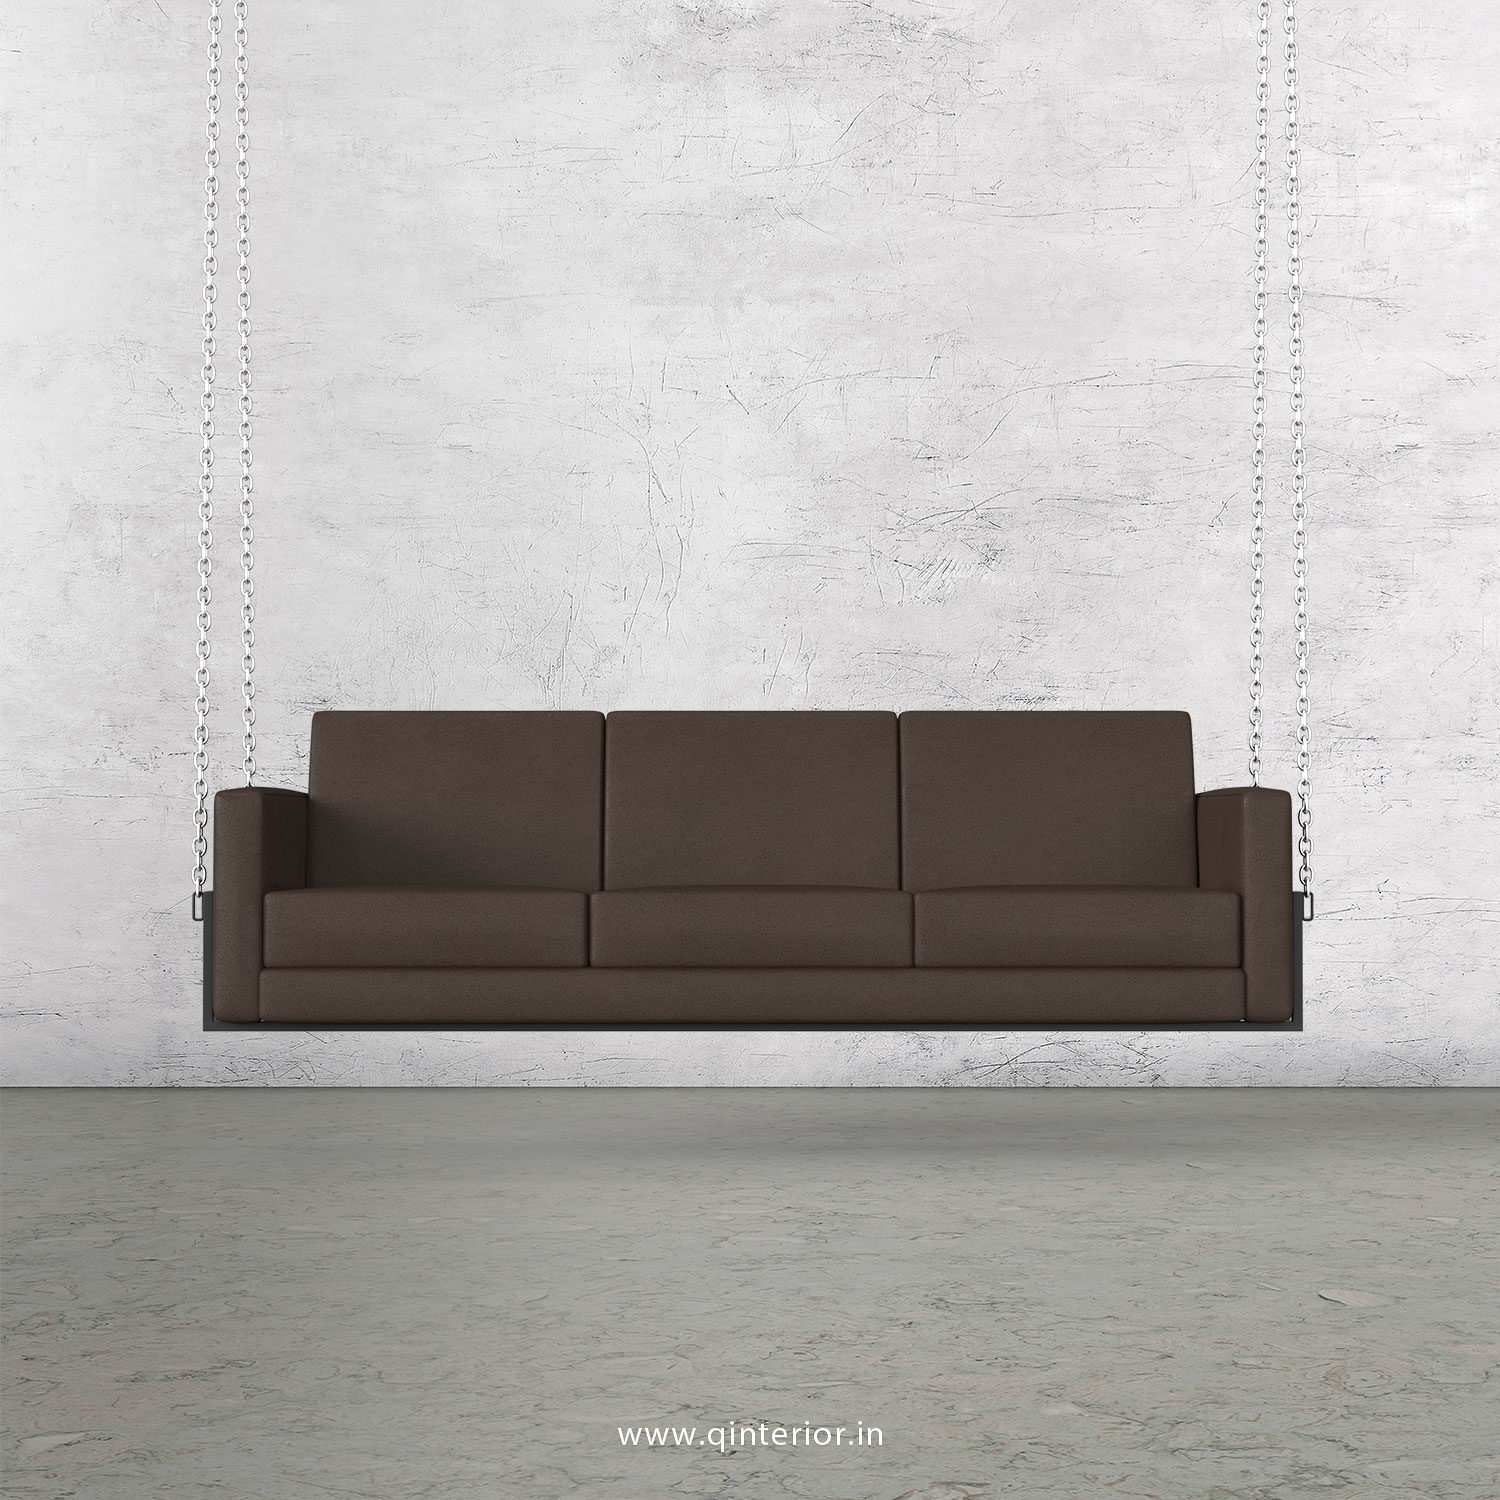 NIRVANA 3 Seater Swing Sofa in Fab Leather Fabric - SSF001 FL11